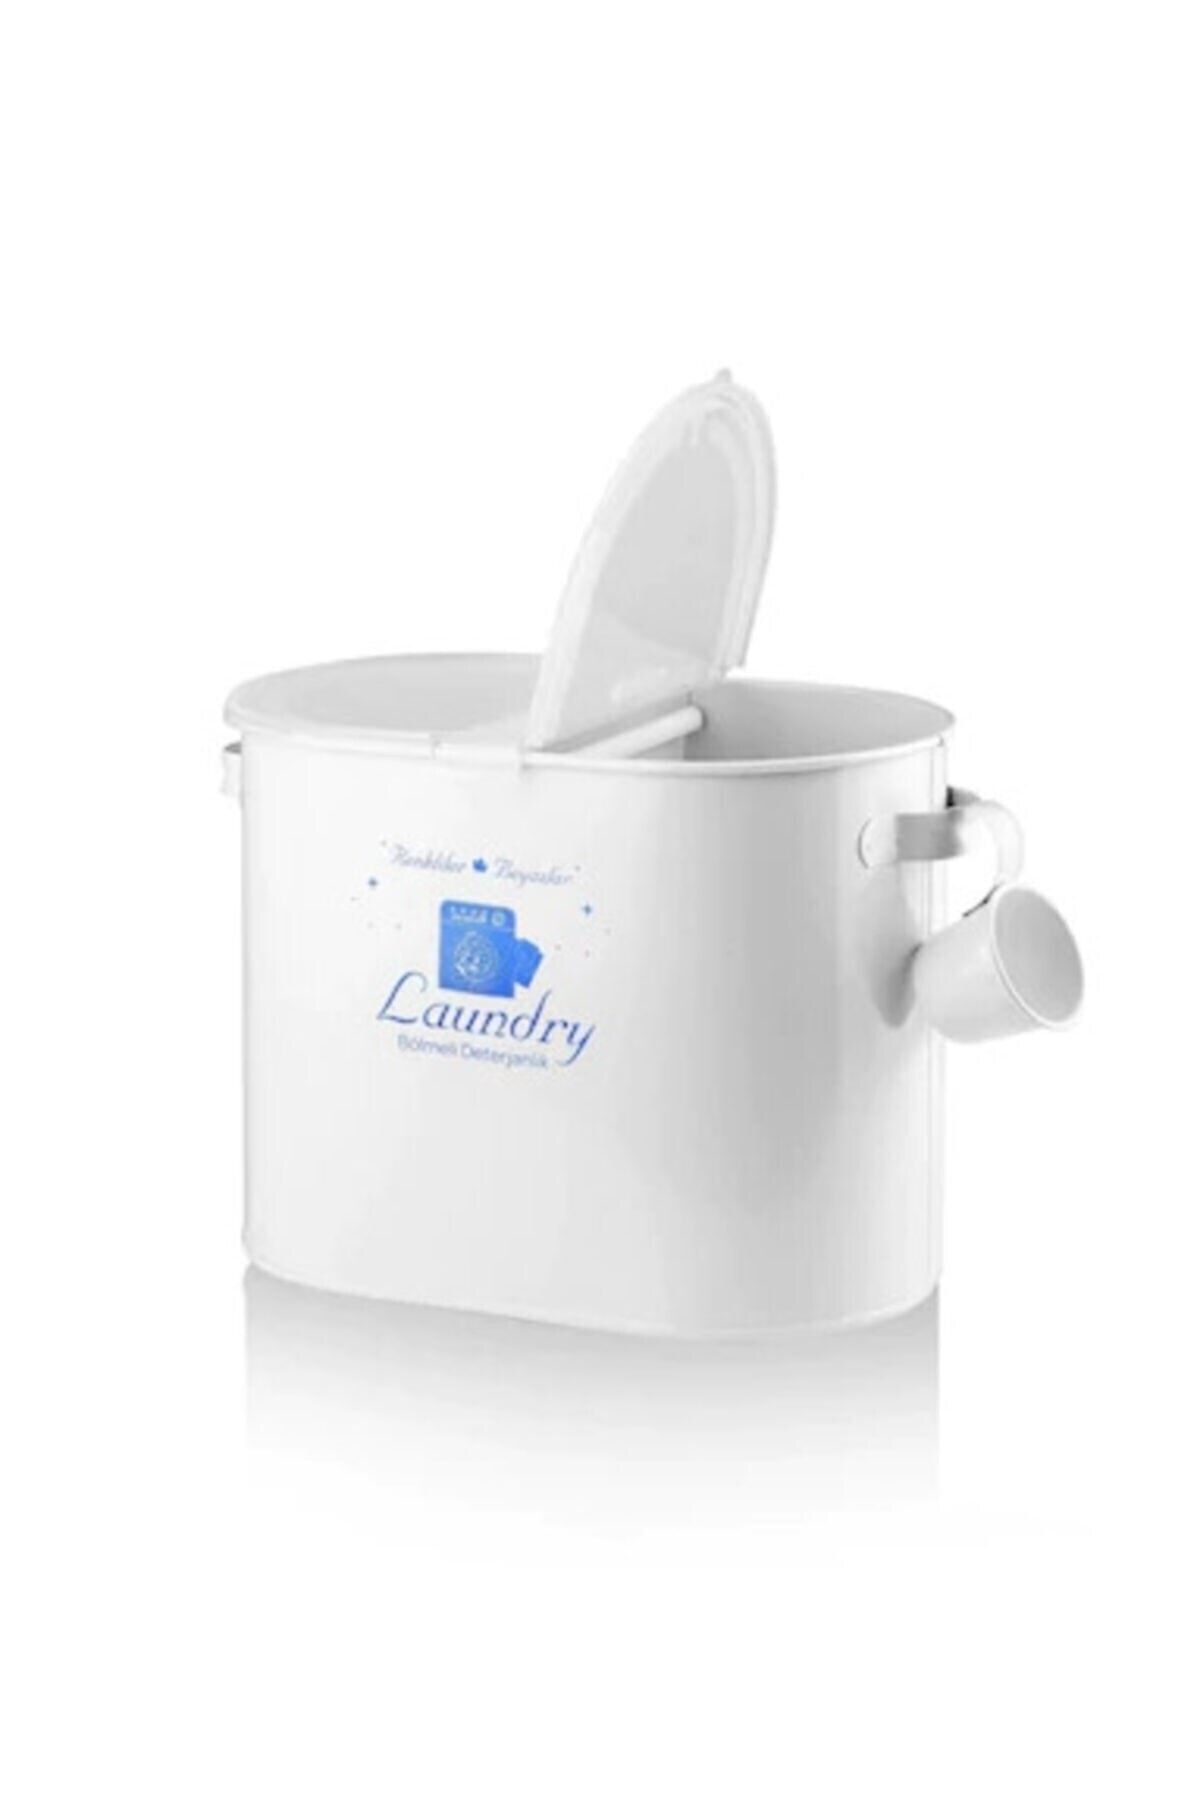 Laundry Metal Beyaz Renk 2 Bölmeli Deterjan Saklama Kutusu Deterjanlık Lr050